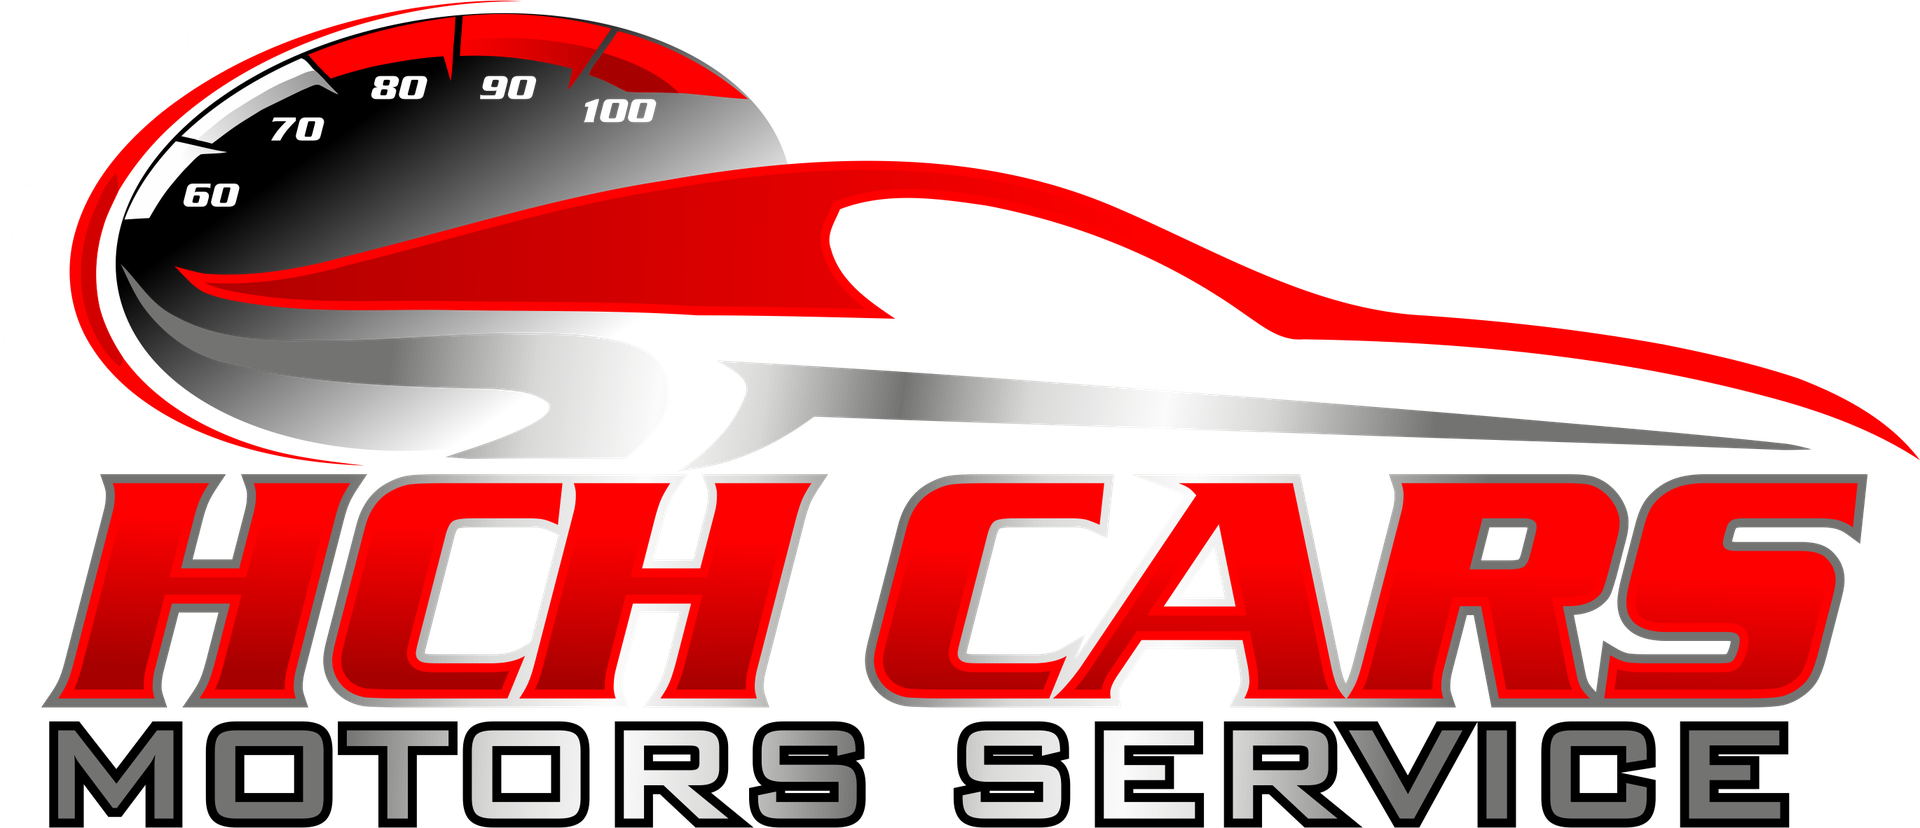 HCH CARS Motors Service